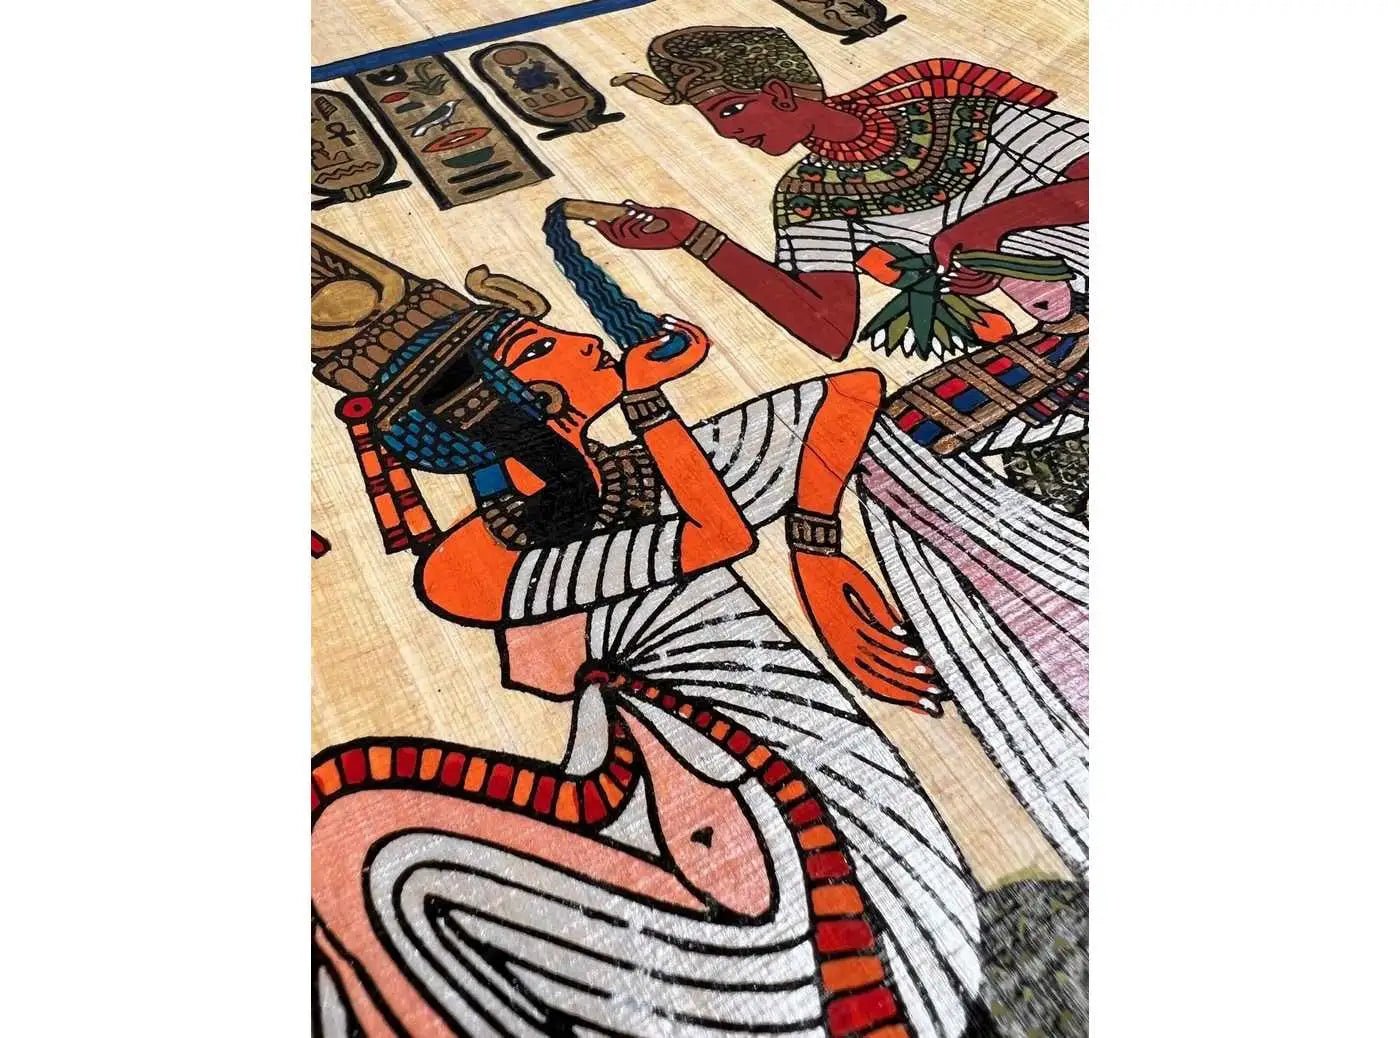 King Tut on Throne with Wife Ankhesenamun Giving Her Perfume • Egypt Decor • Wall Art Papyrus